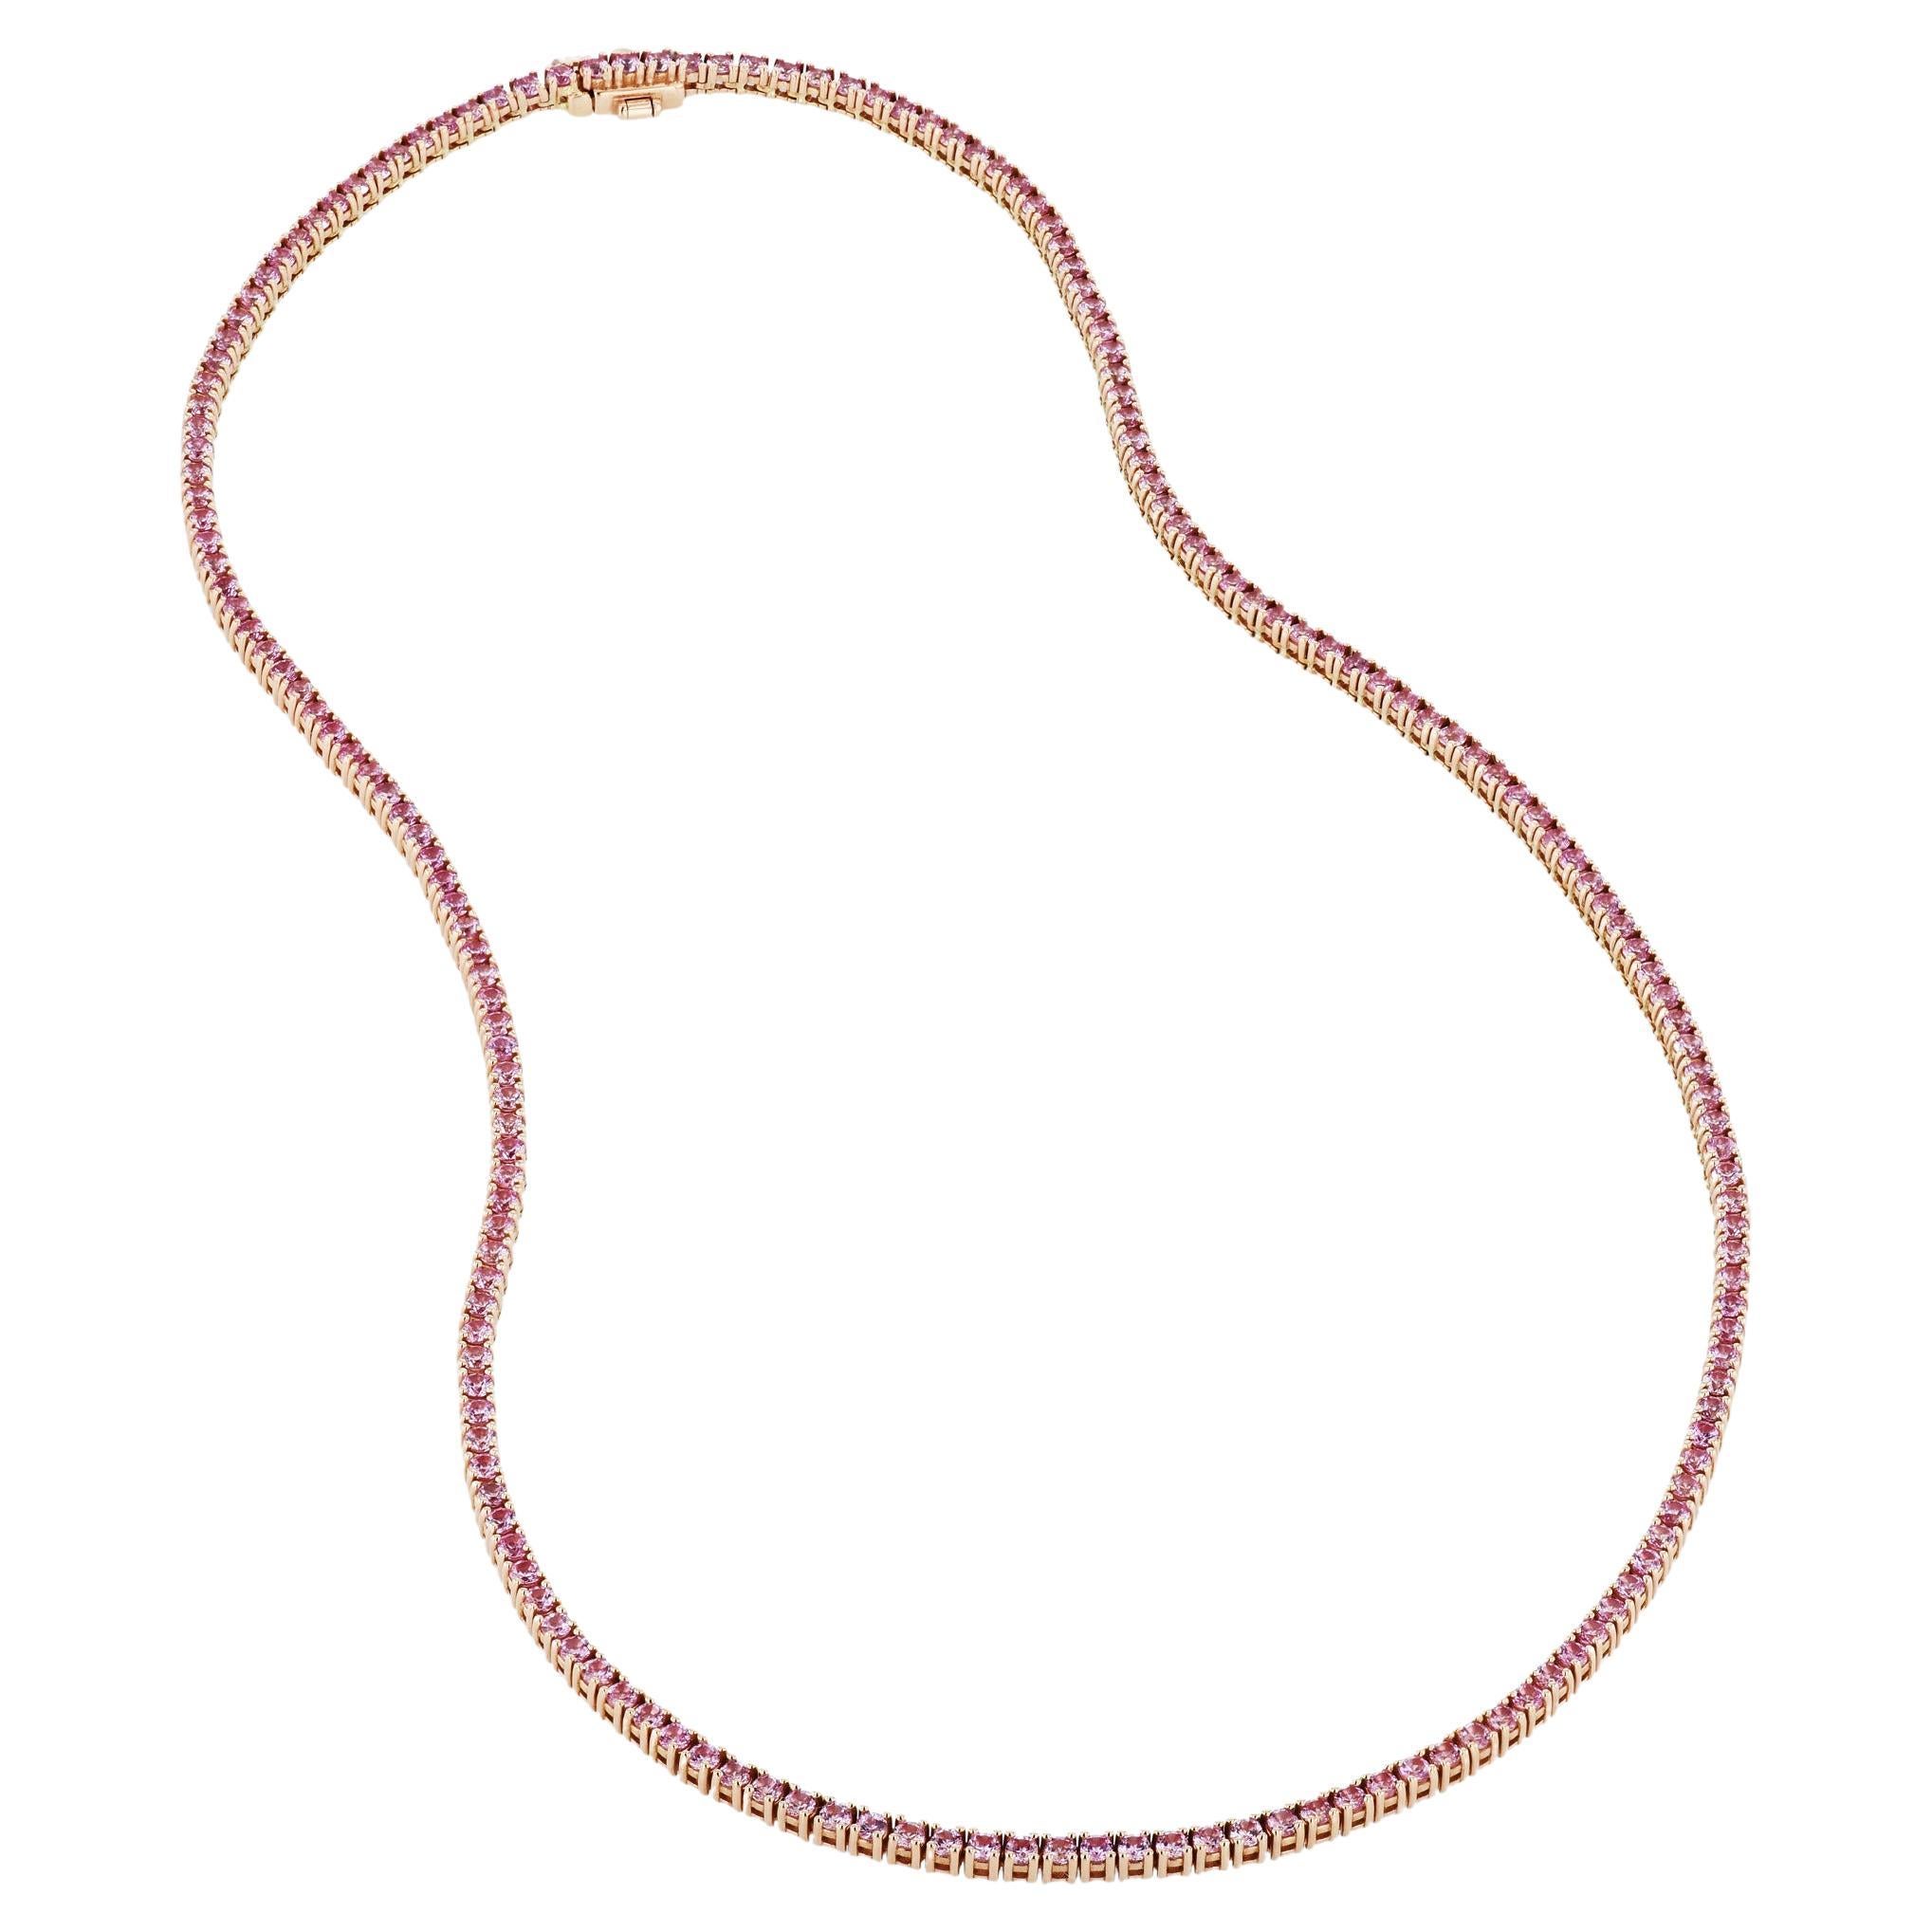 Handmade 7.58 Carat Pink Sapphire Tennis Necklace Rose Gold 